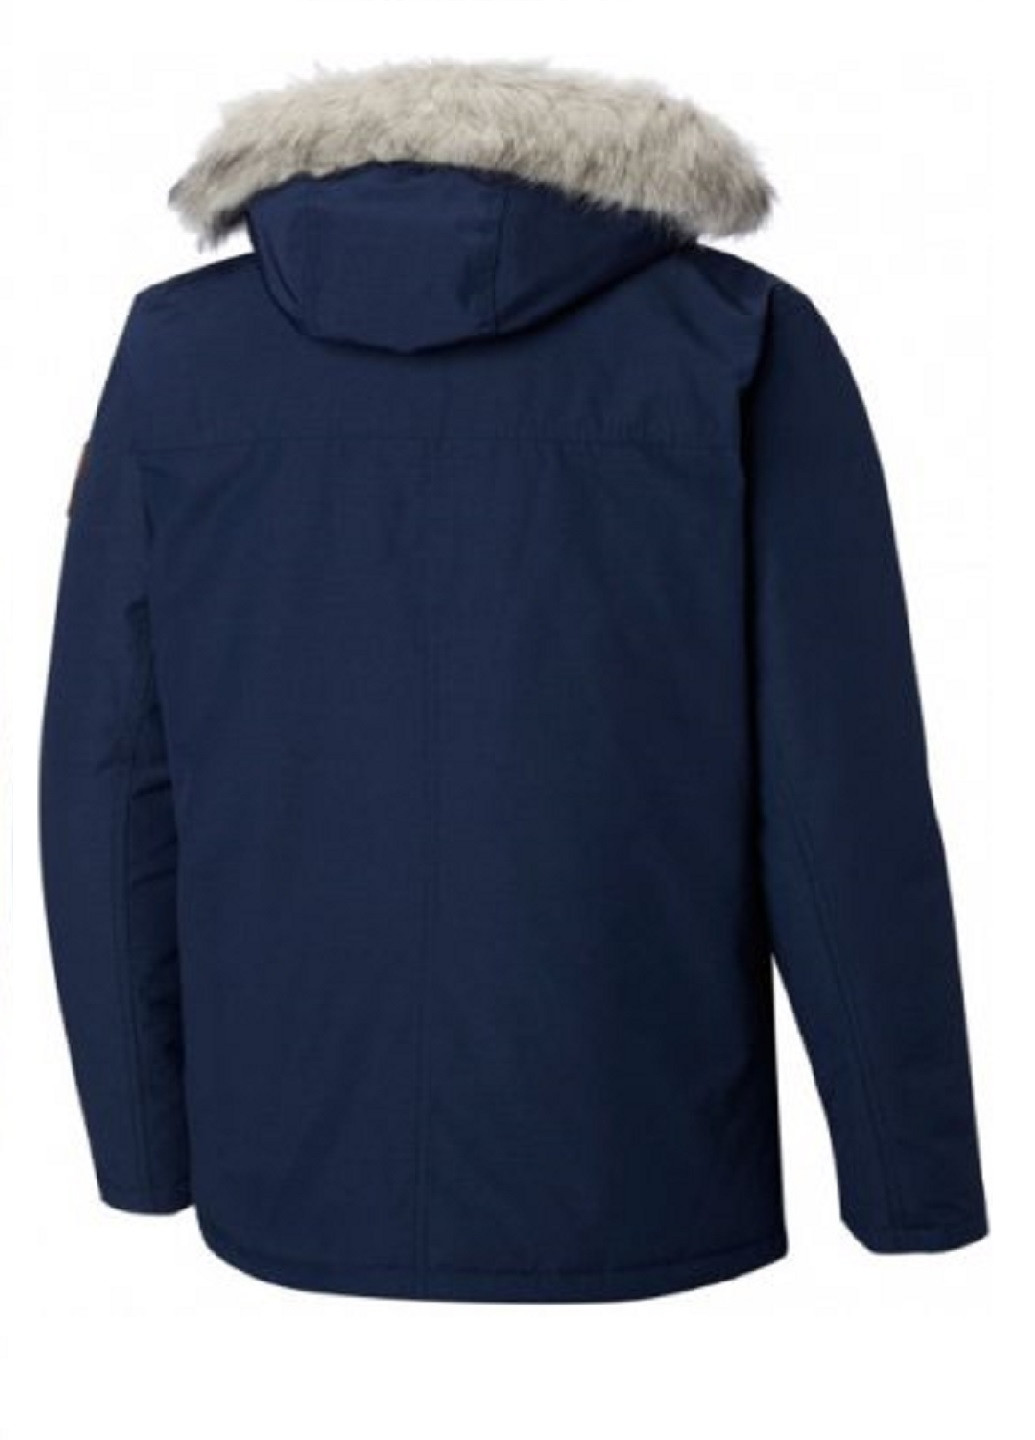 Черная зимняя куртка marquam peak™ jacket Columbia